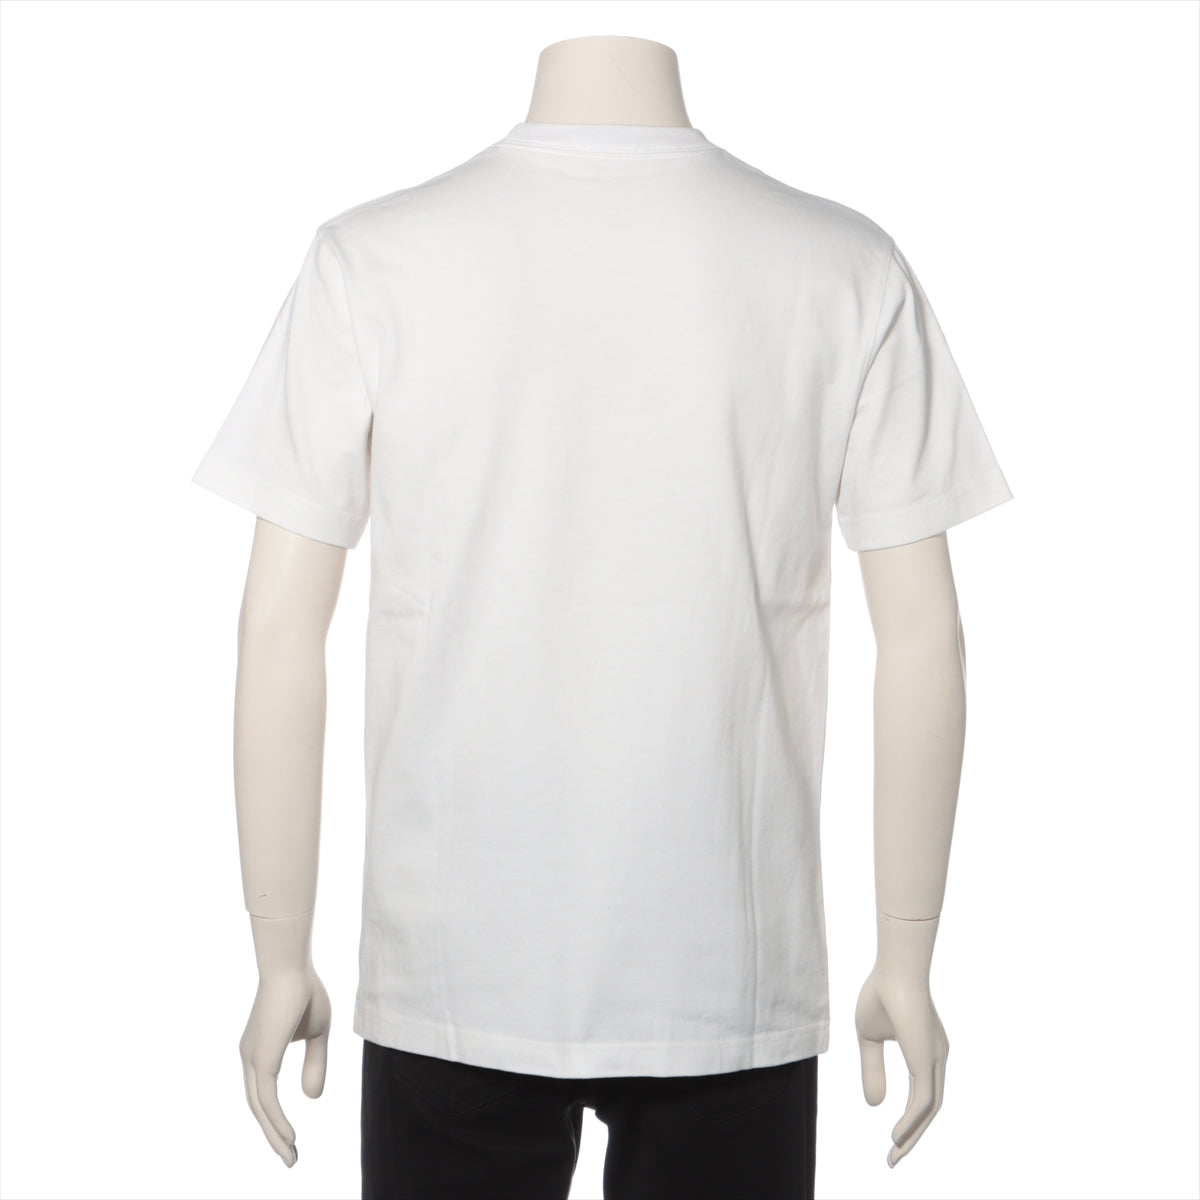 Dior x Nike Air Cotton T-shirt XS Men's White  033J625B0554 embroidery